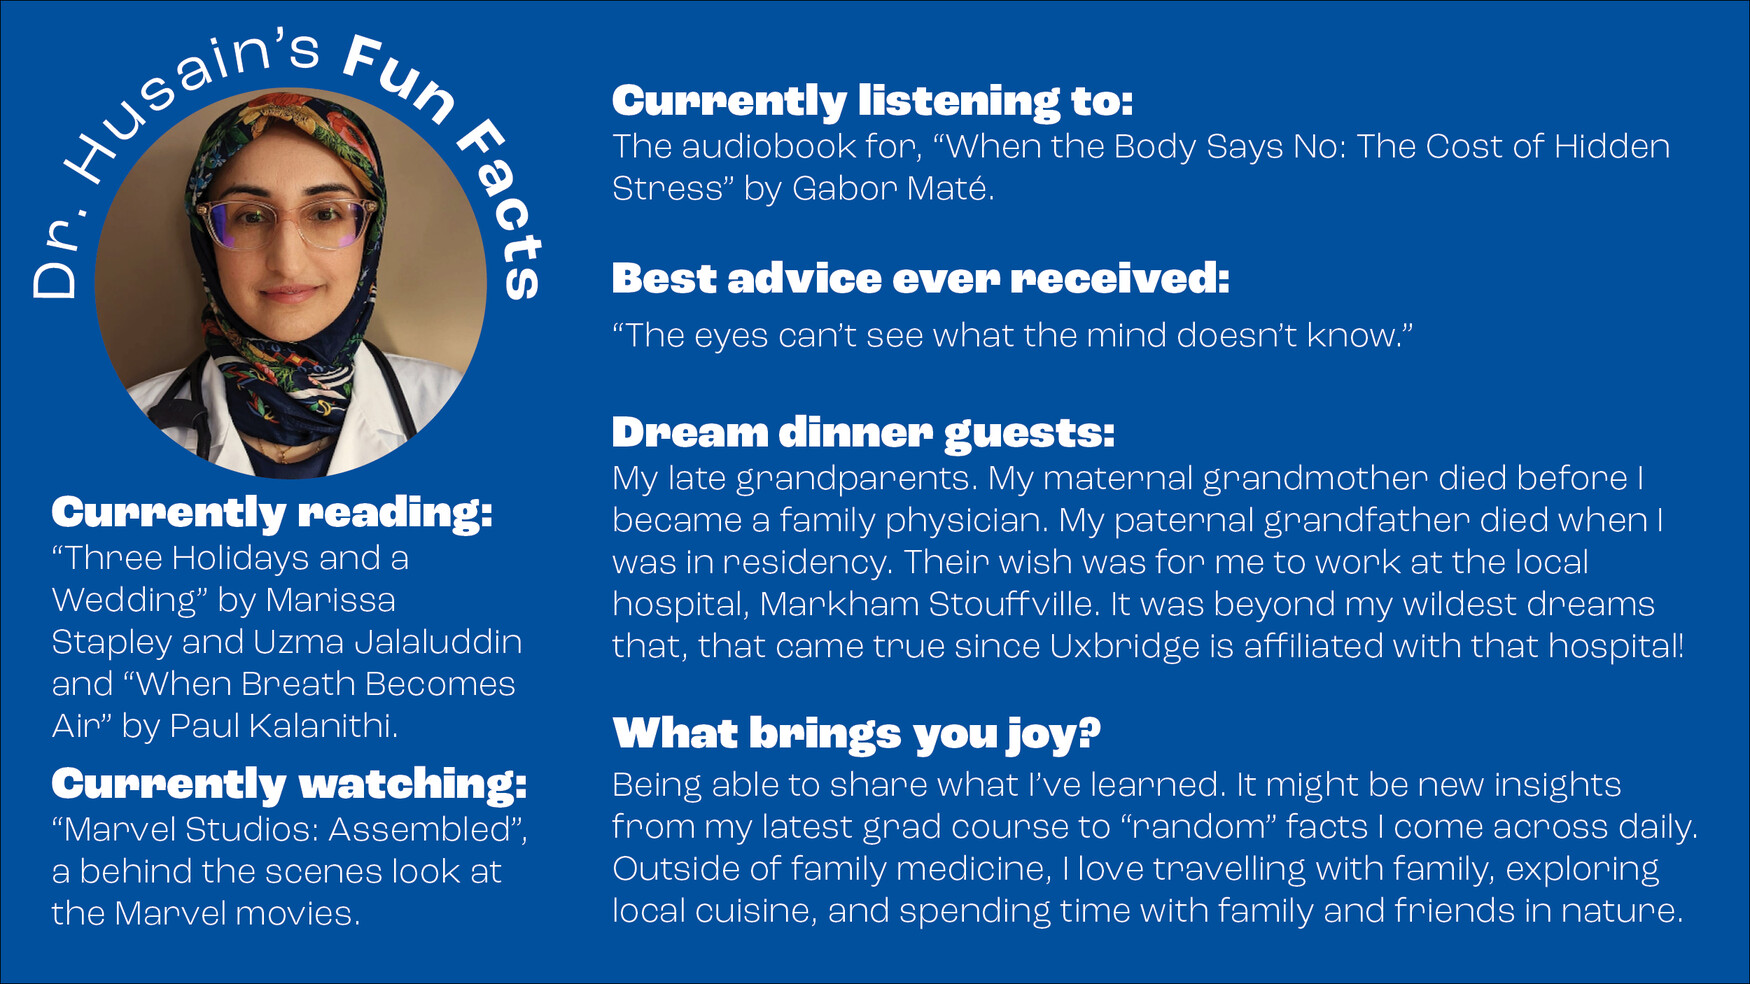 Fun facts about Dr. Aisha Husain